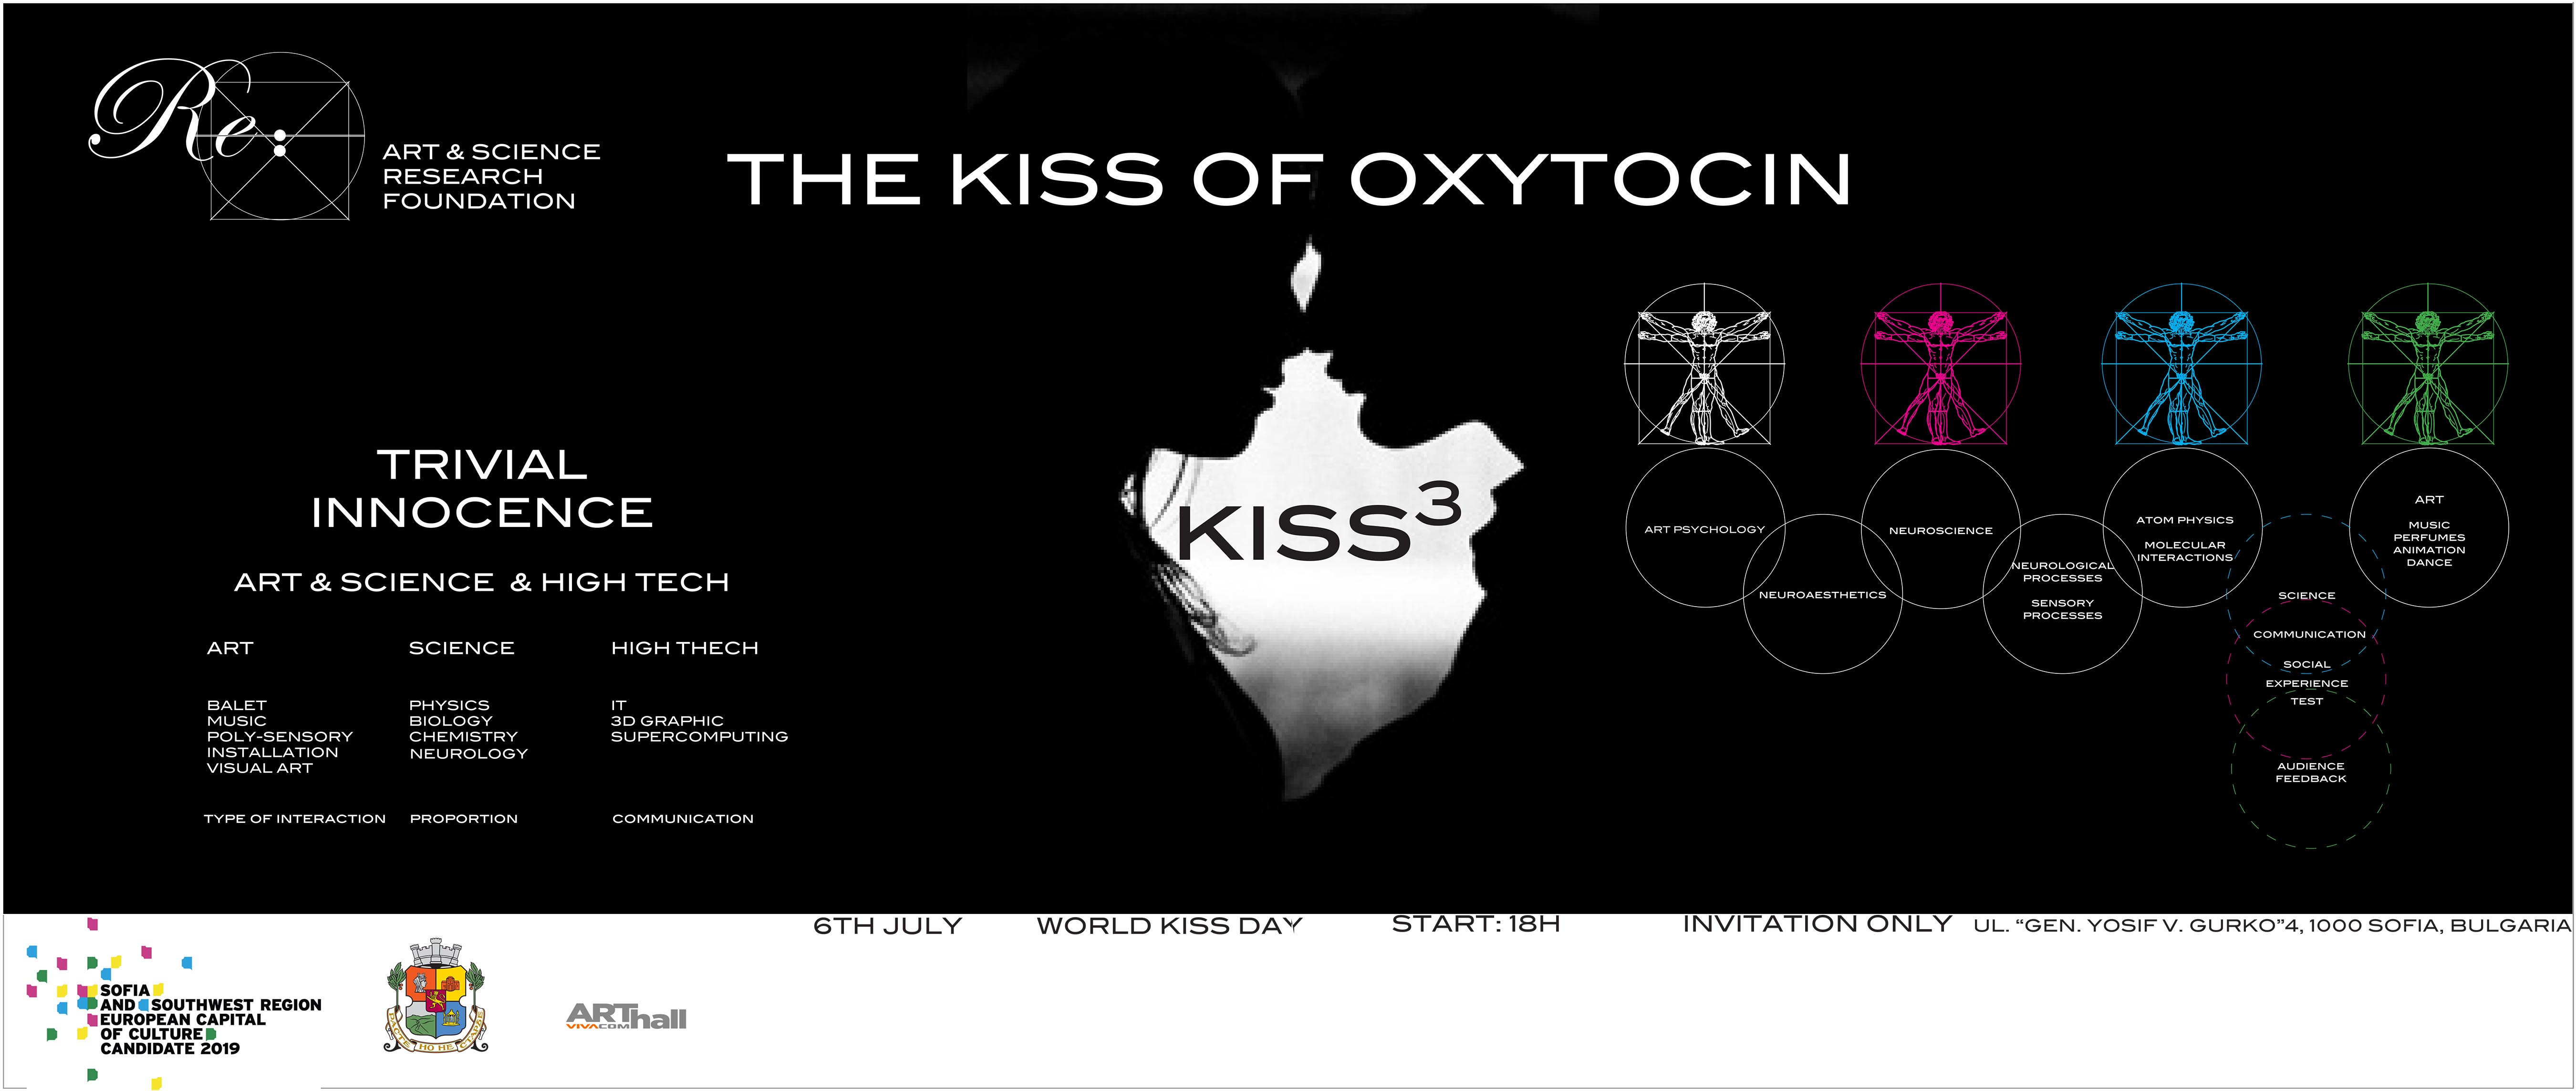 THE KISS OF OXYTOCIN